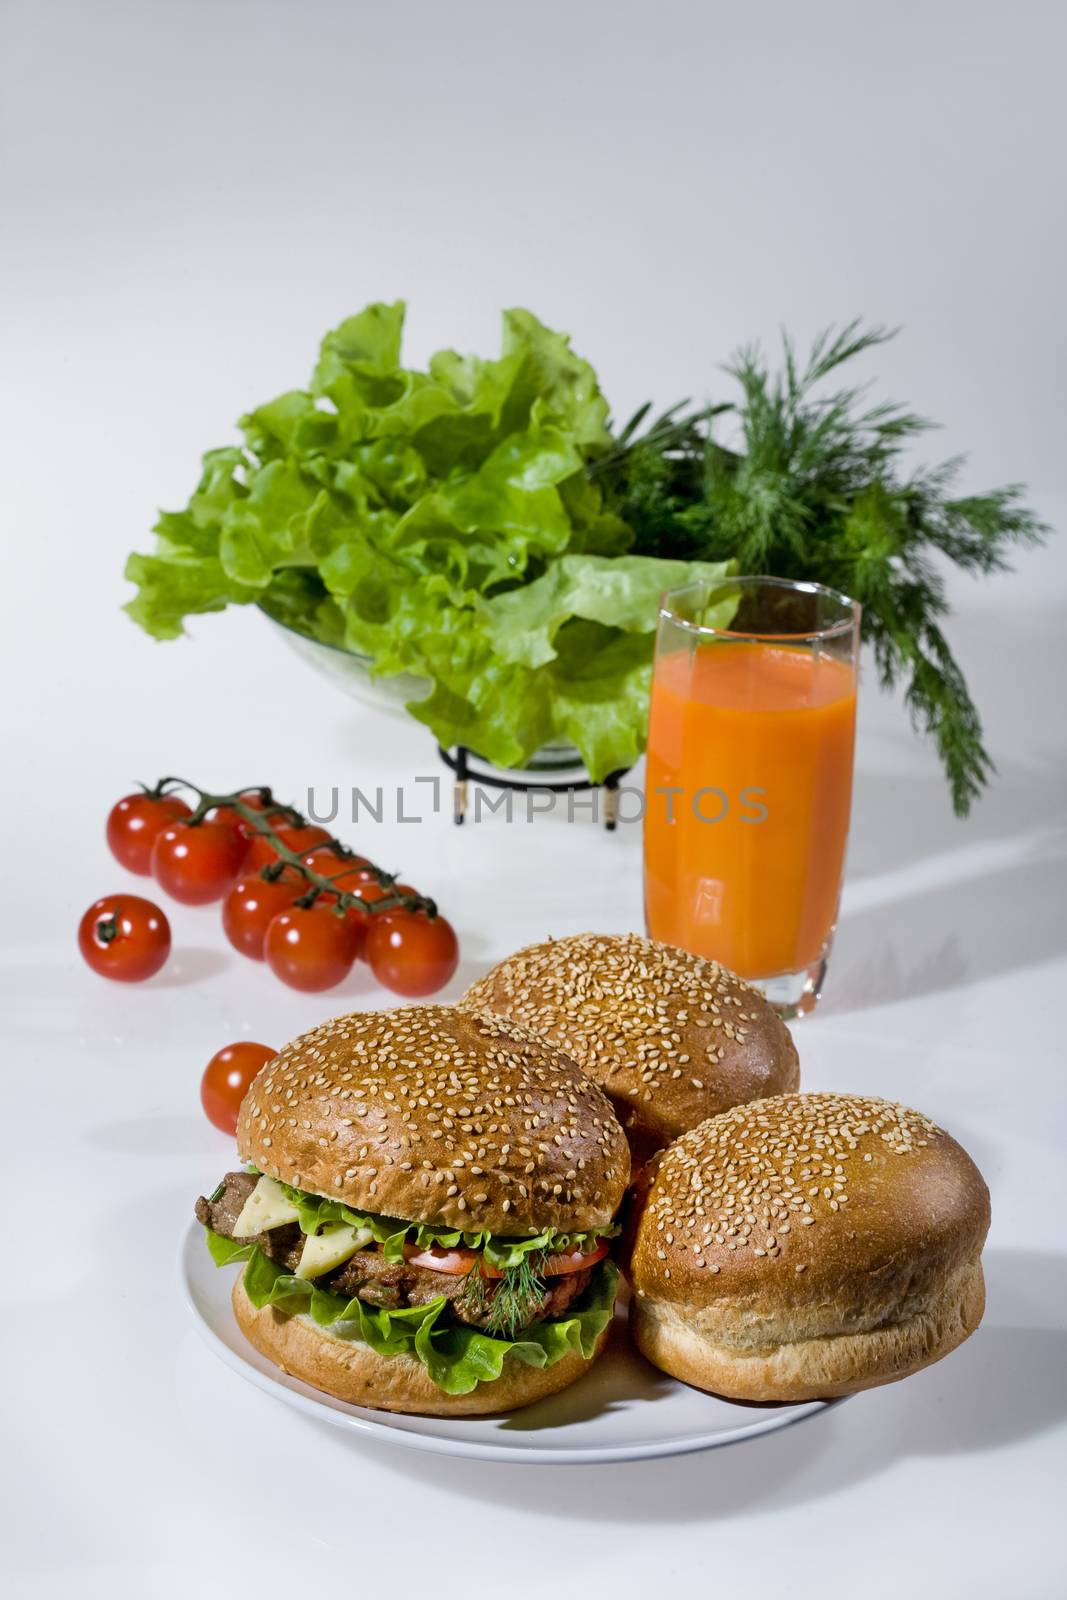 Burgers And Juice by Fotoskat